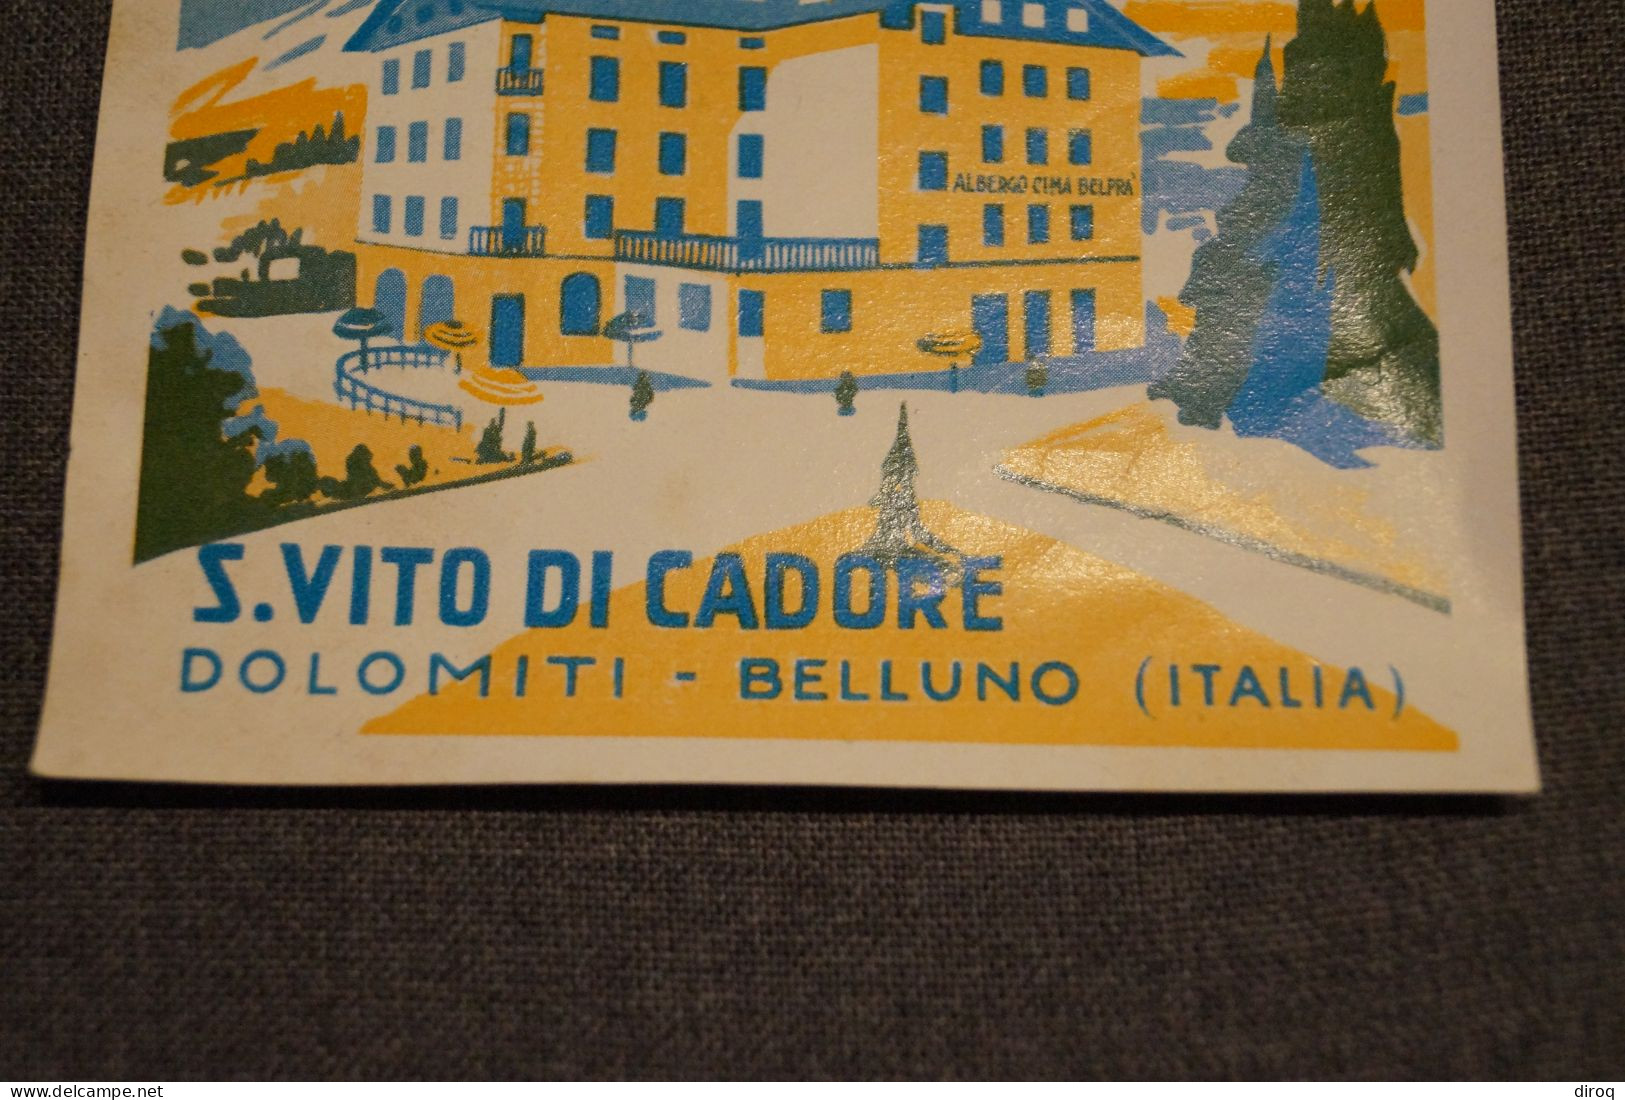 Belle Ancienne Petite Affiche Originale,Italie,Albergo Cima Belpra,Dolomiti - Belluno,122 / 102 Mm. - Posters